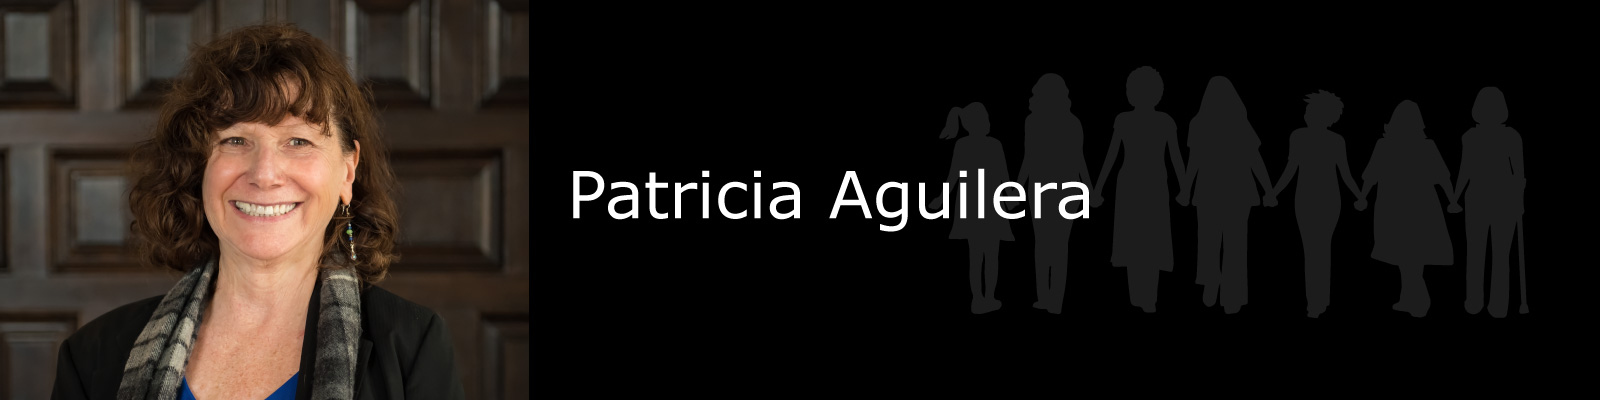 Photo of Patricia Aguilera.